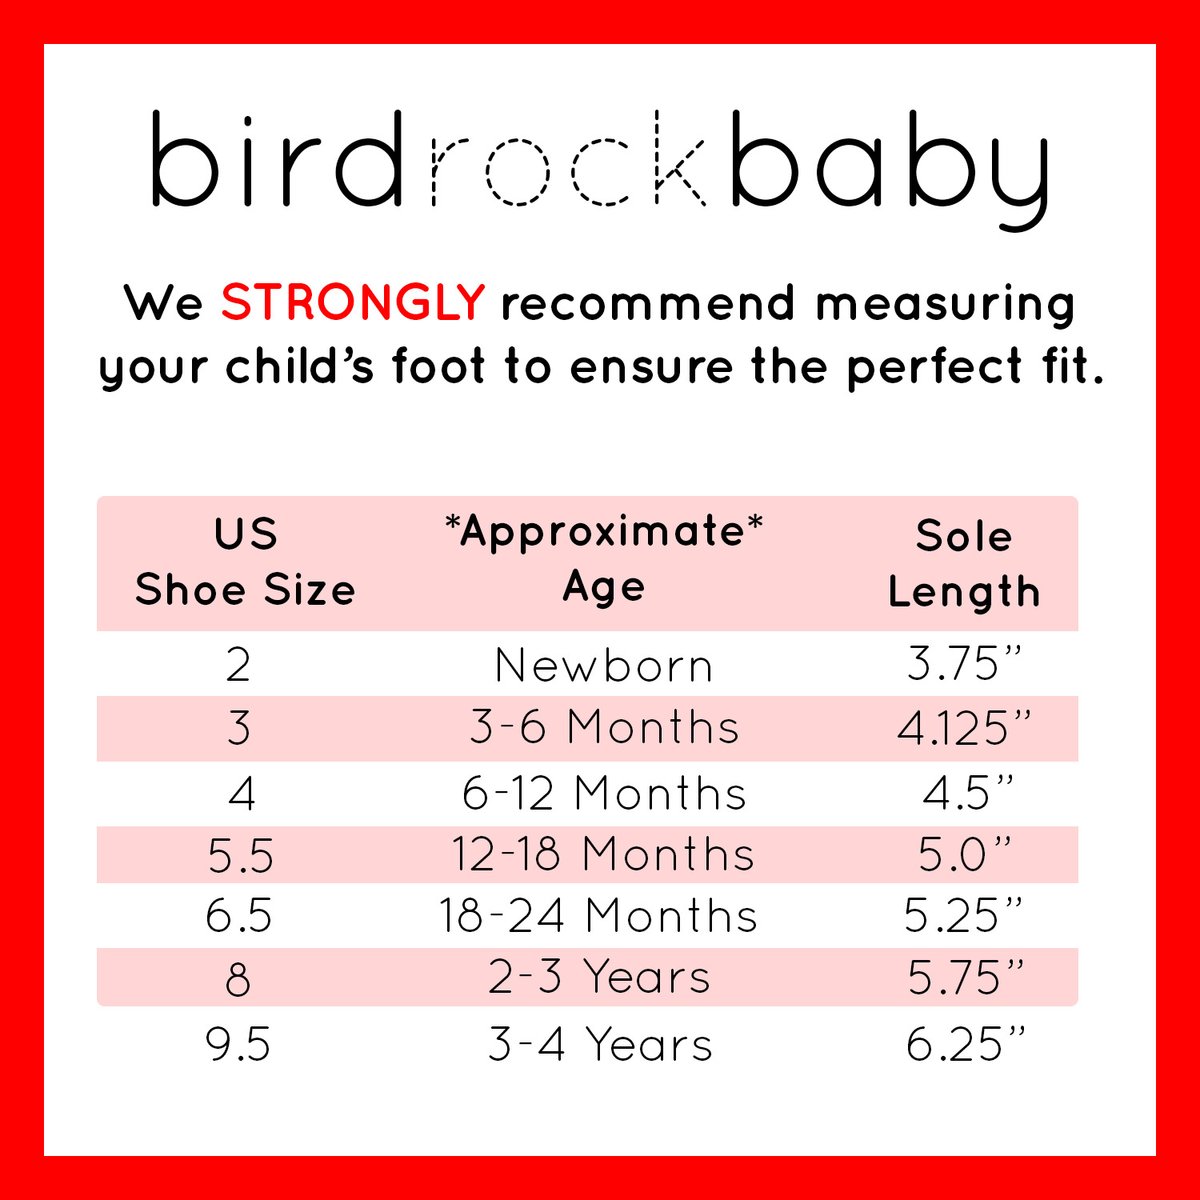 BirdRock Baby - Confetti Moccasins